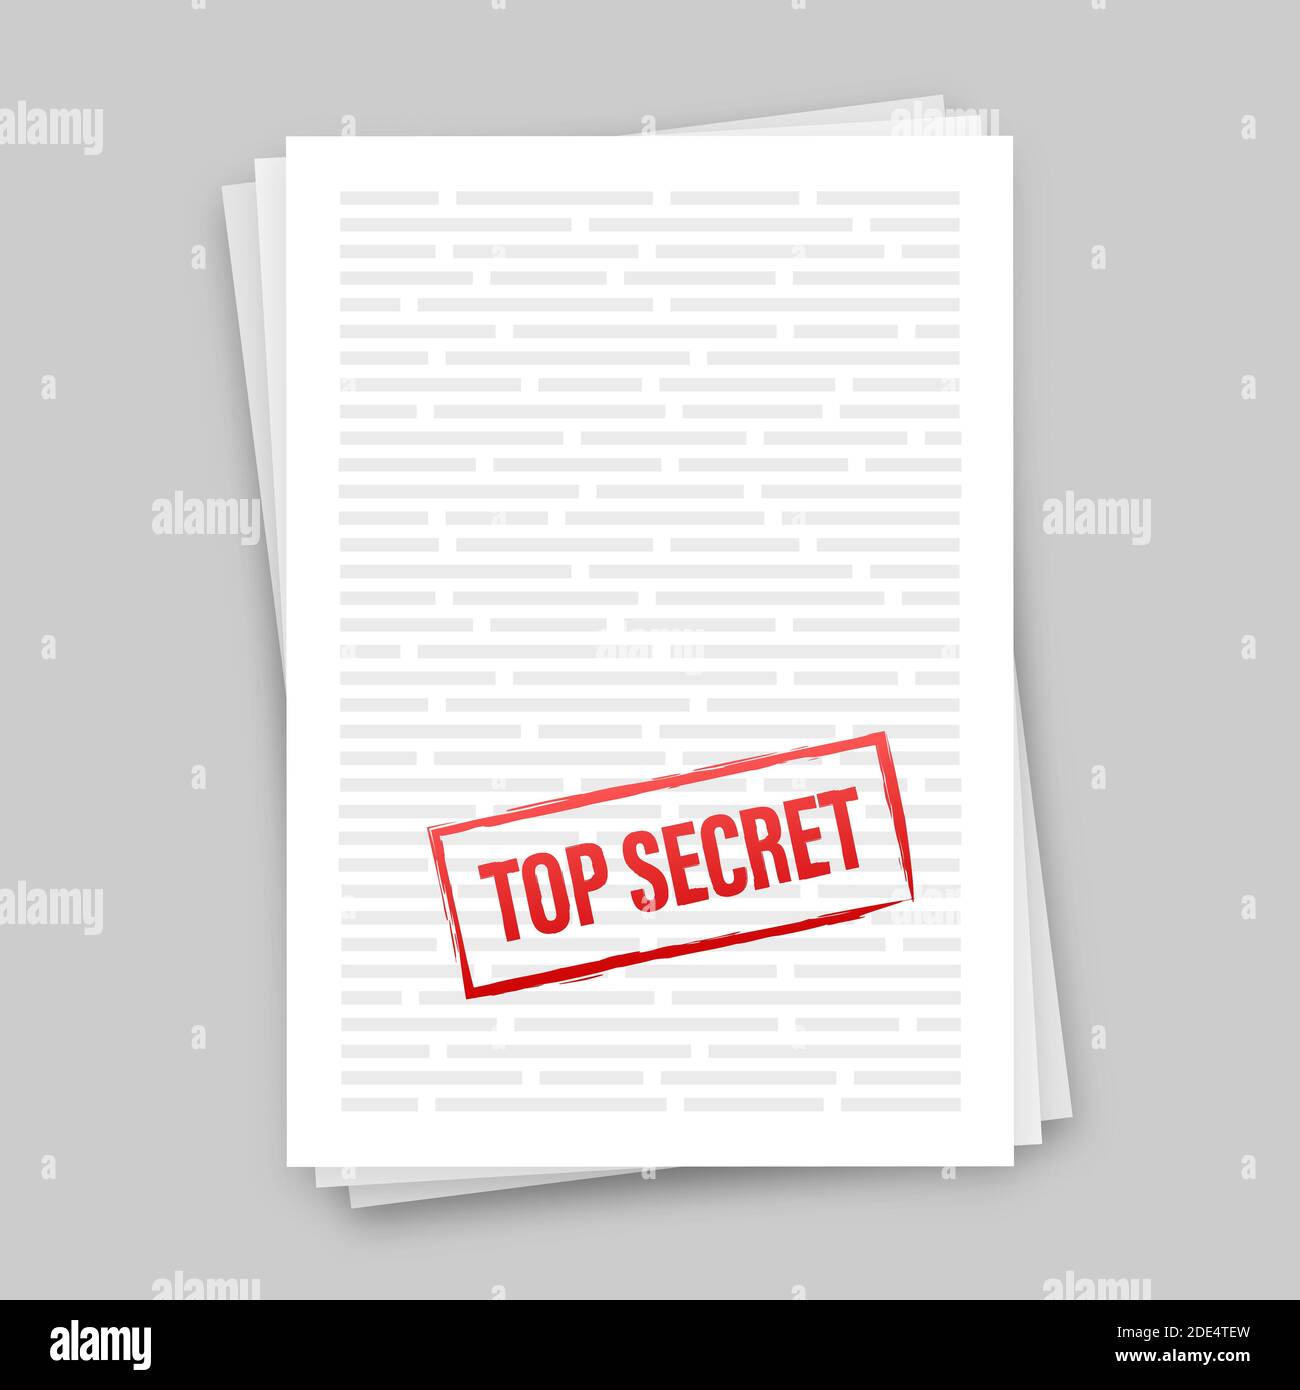 Banner mit Top Secret für Papier-Design. Dokumentsymbol. Vektorgrafik. Stock Vektor